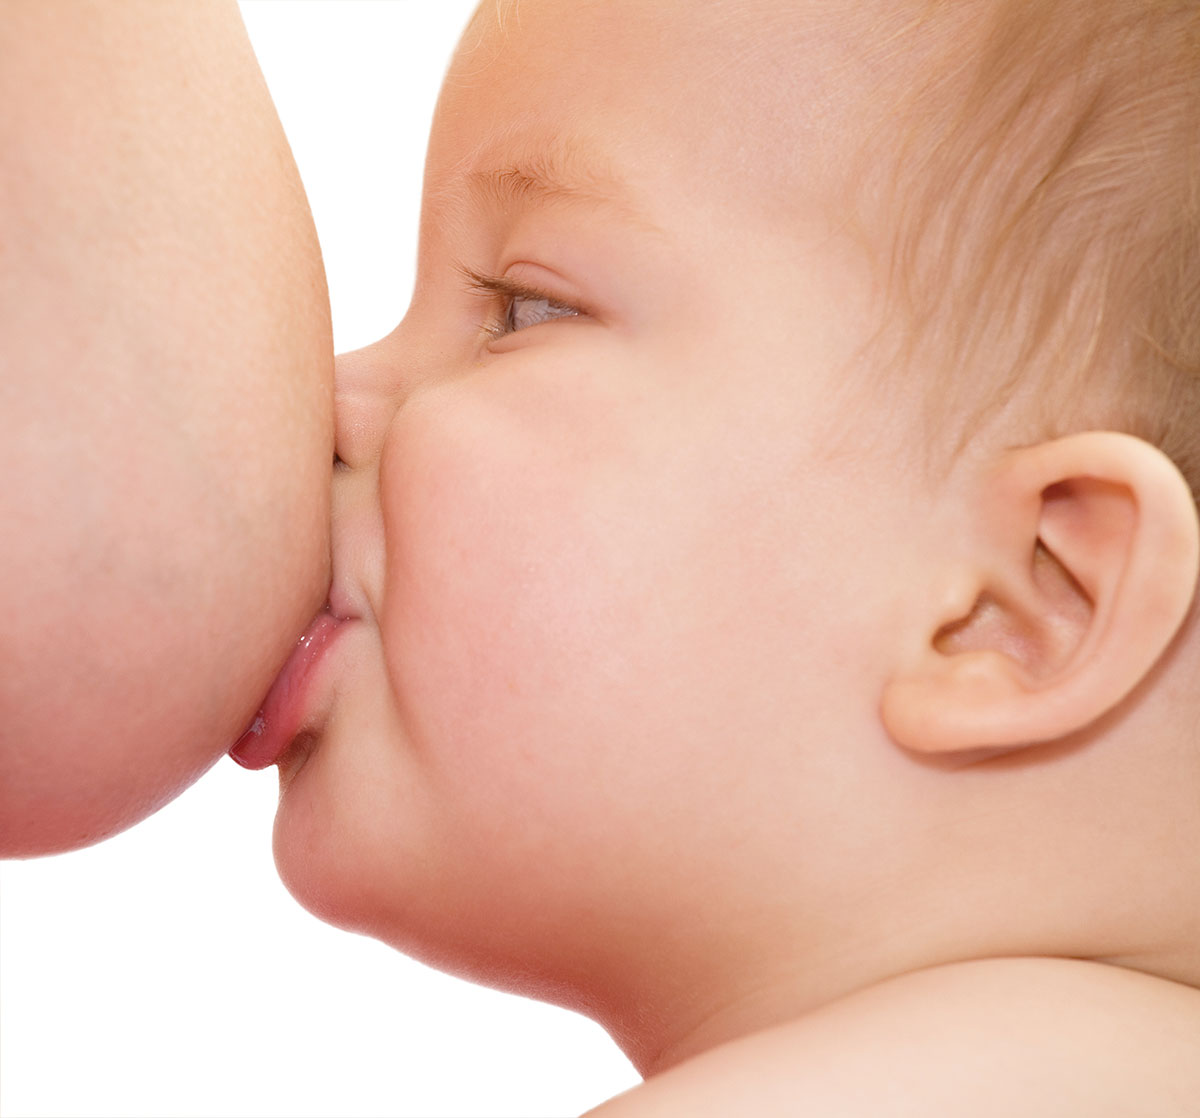 https://www.parentmap.com/article/images/stories/bm14_breastfeeding_1200x1118.jpg